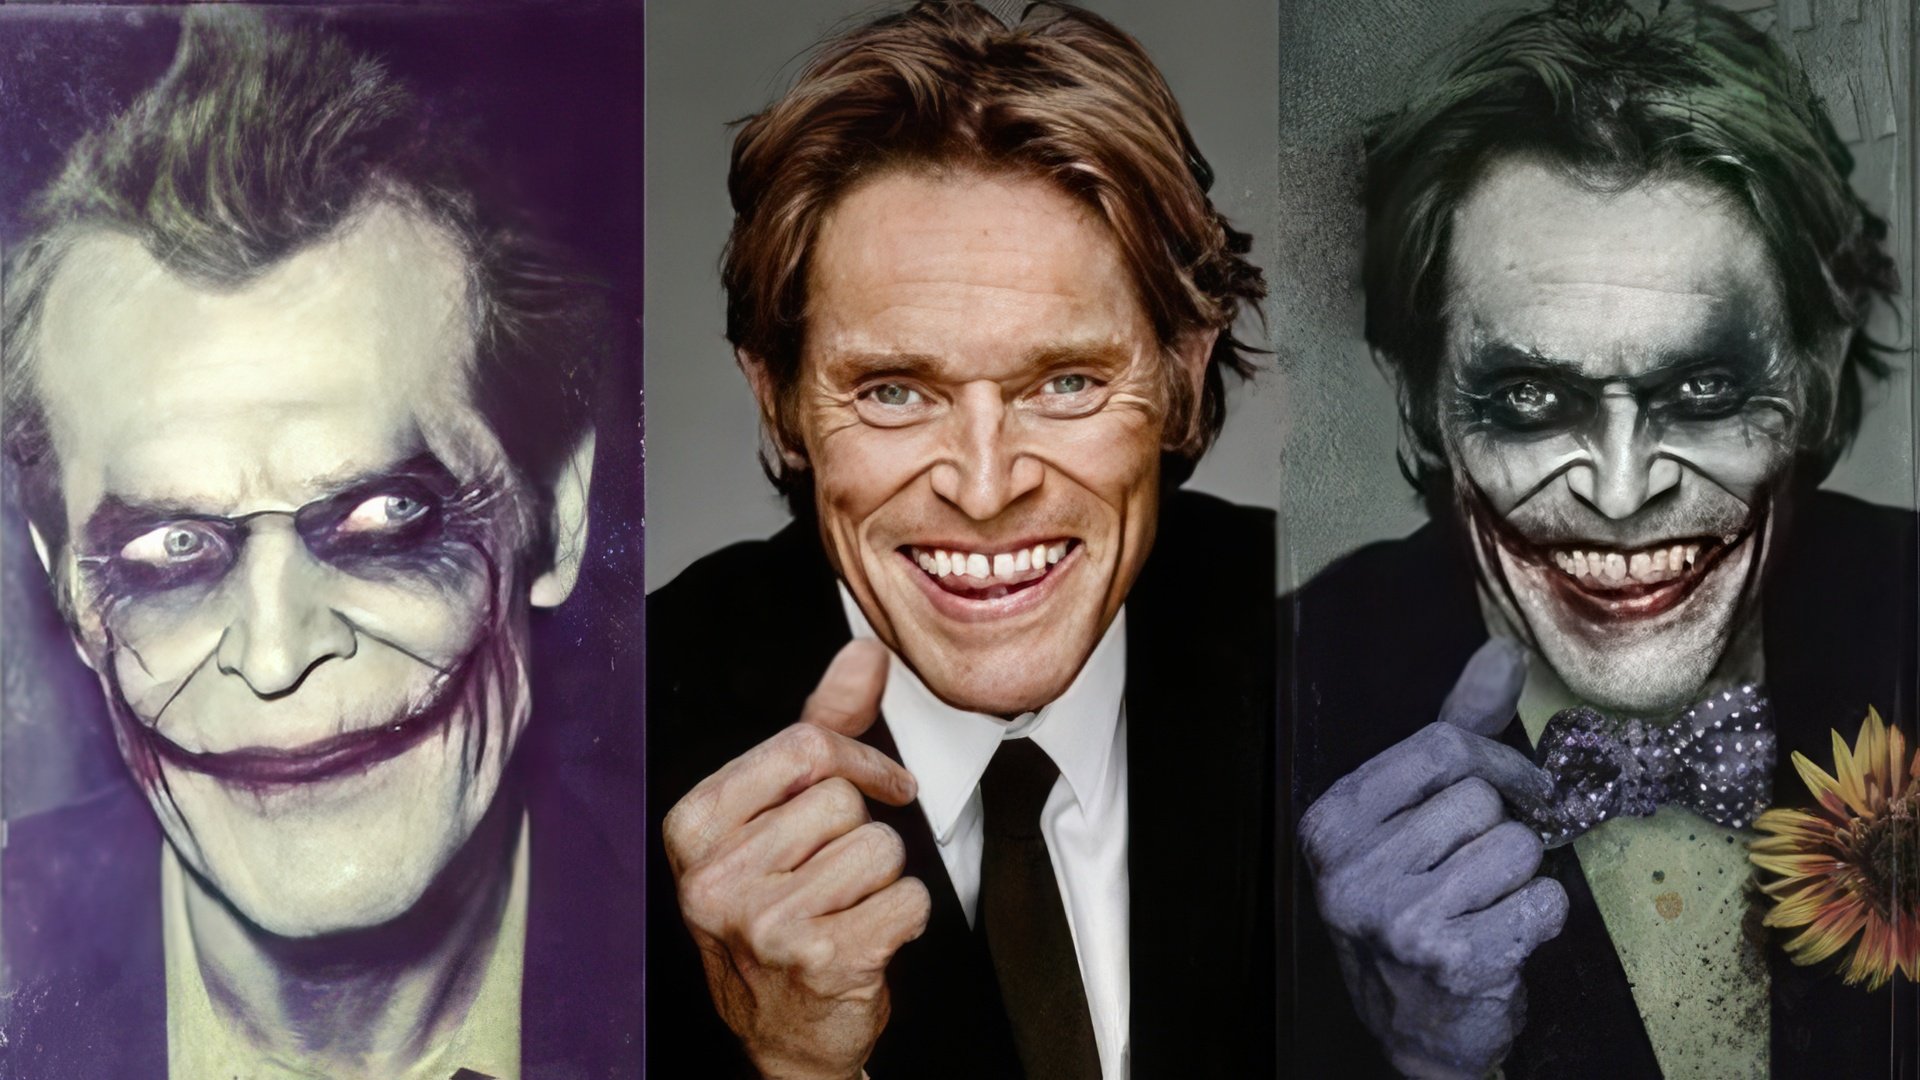 Willem Dafoe as The Joker